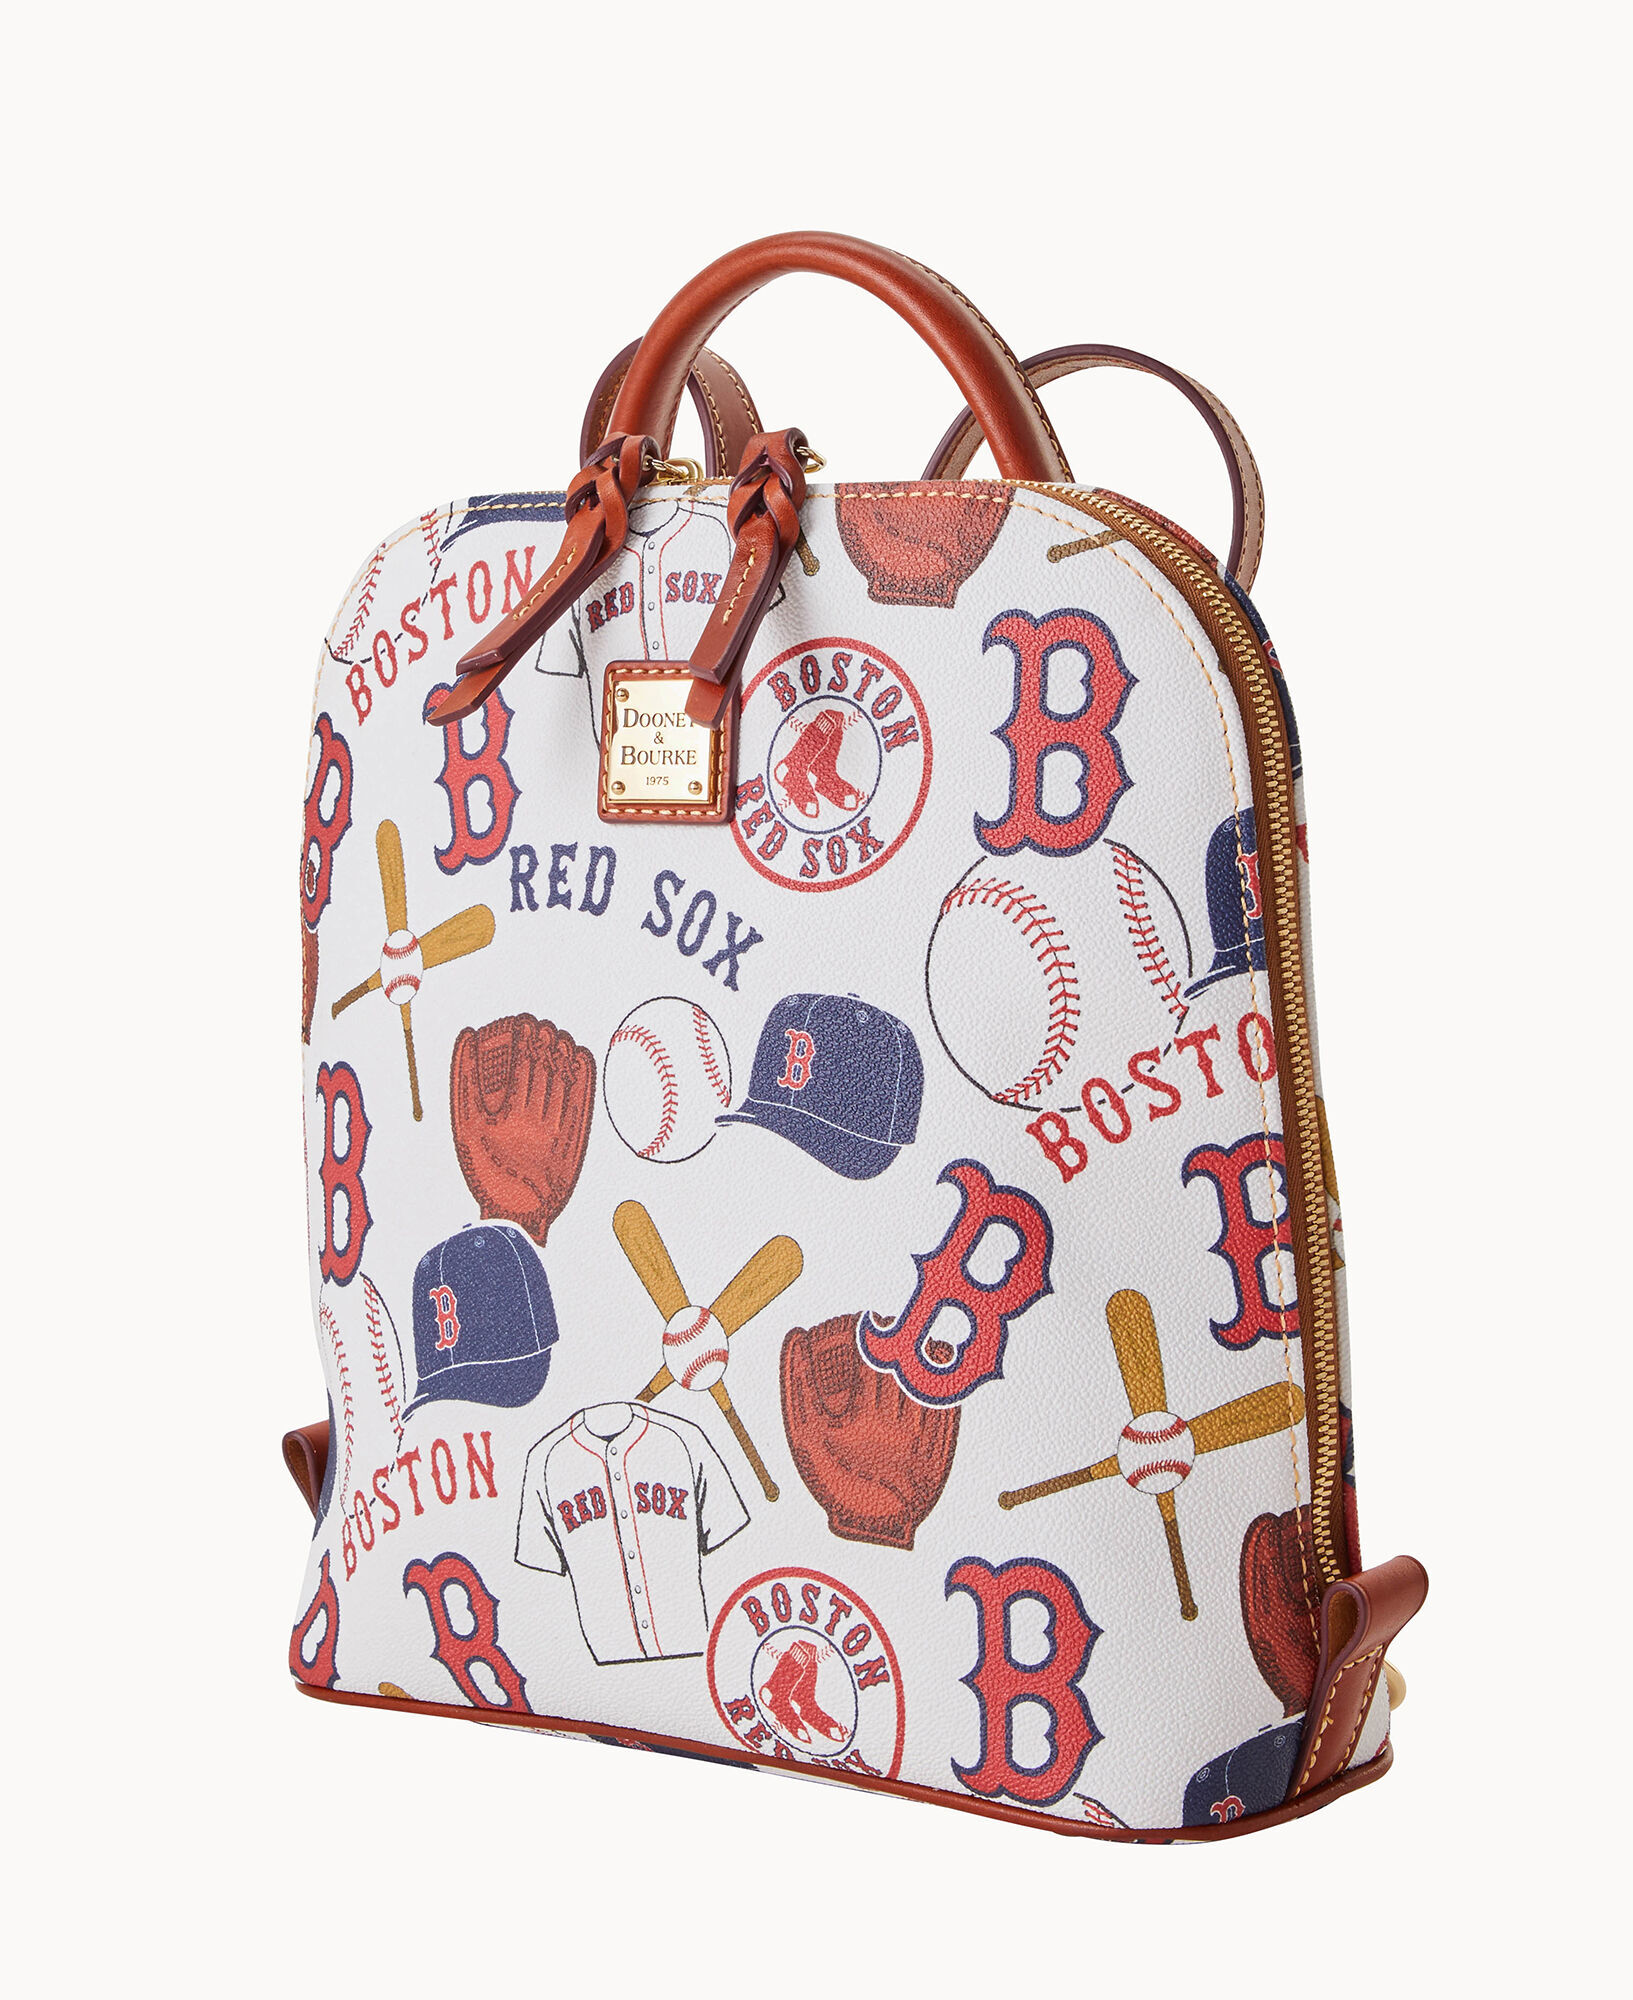 MLB Cubs Zip Pod Backpack